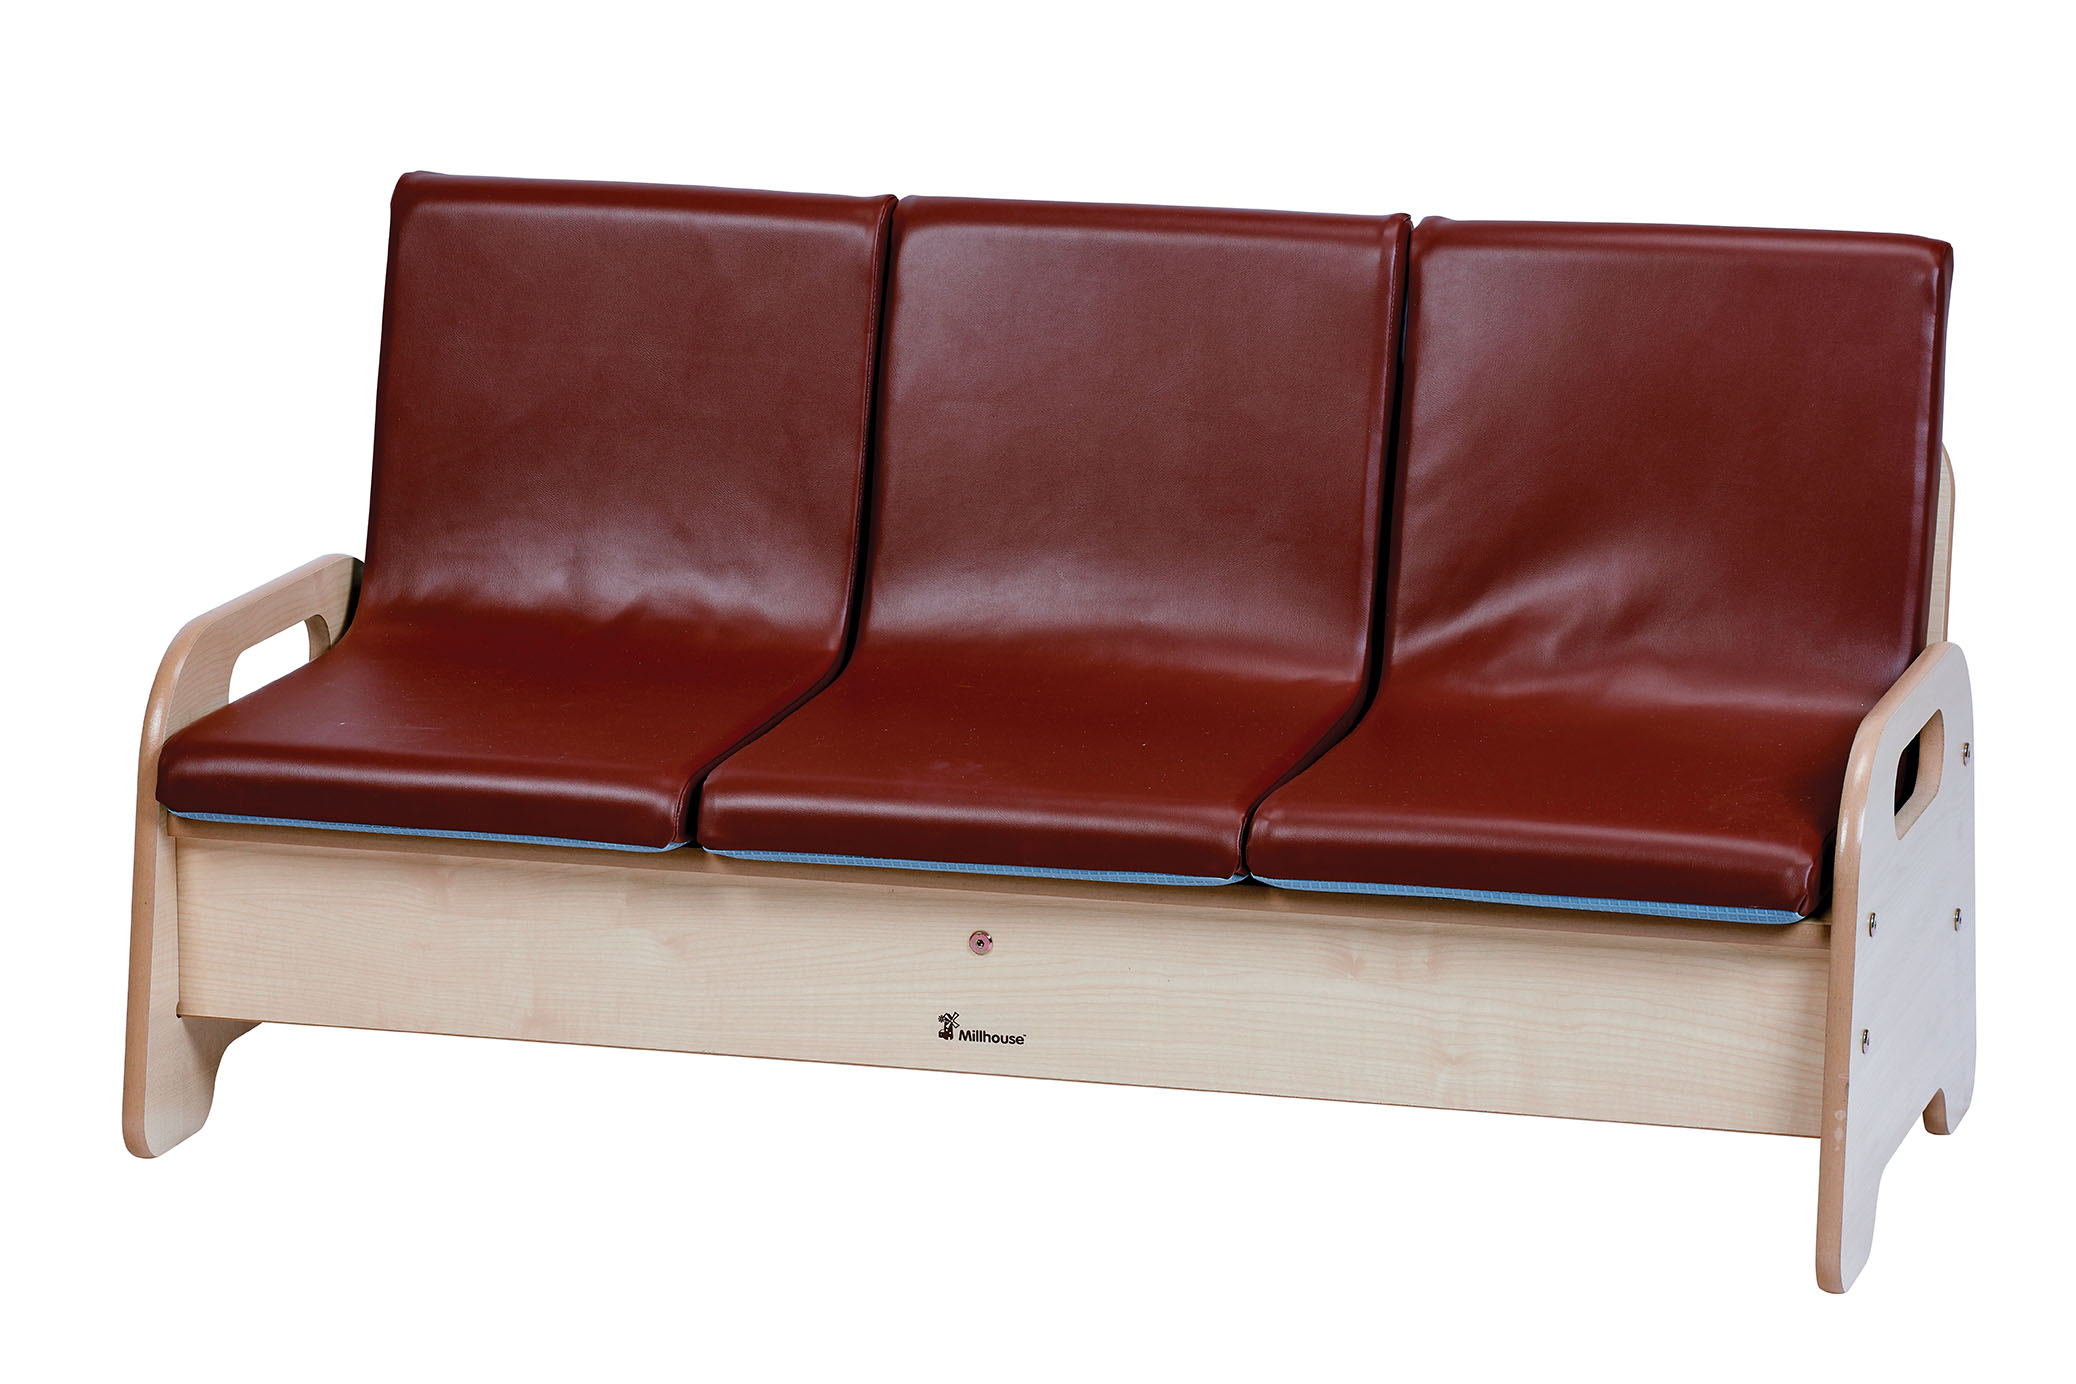 PT974-Millhouse-Early-Years-Furniture-3-Seat-Sofa_Main_RGB.jpg